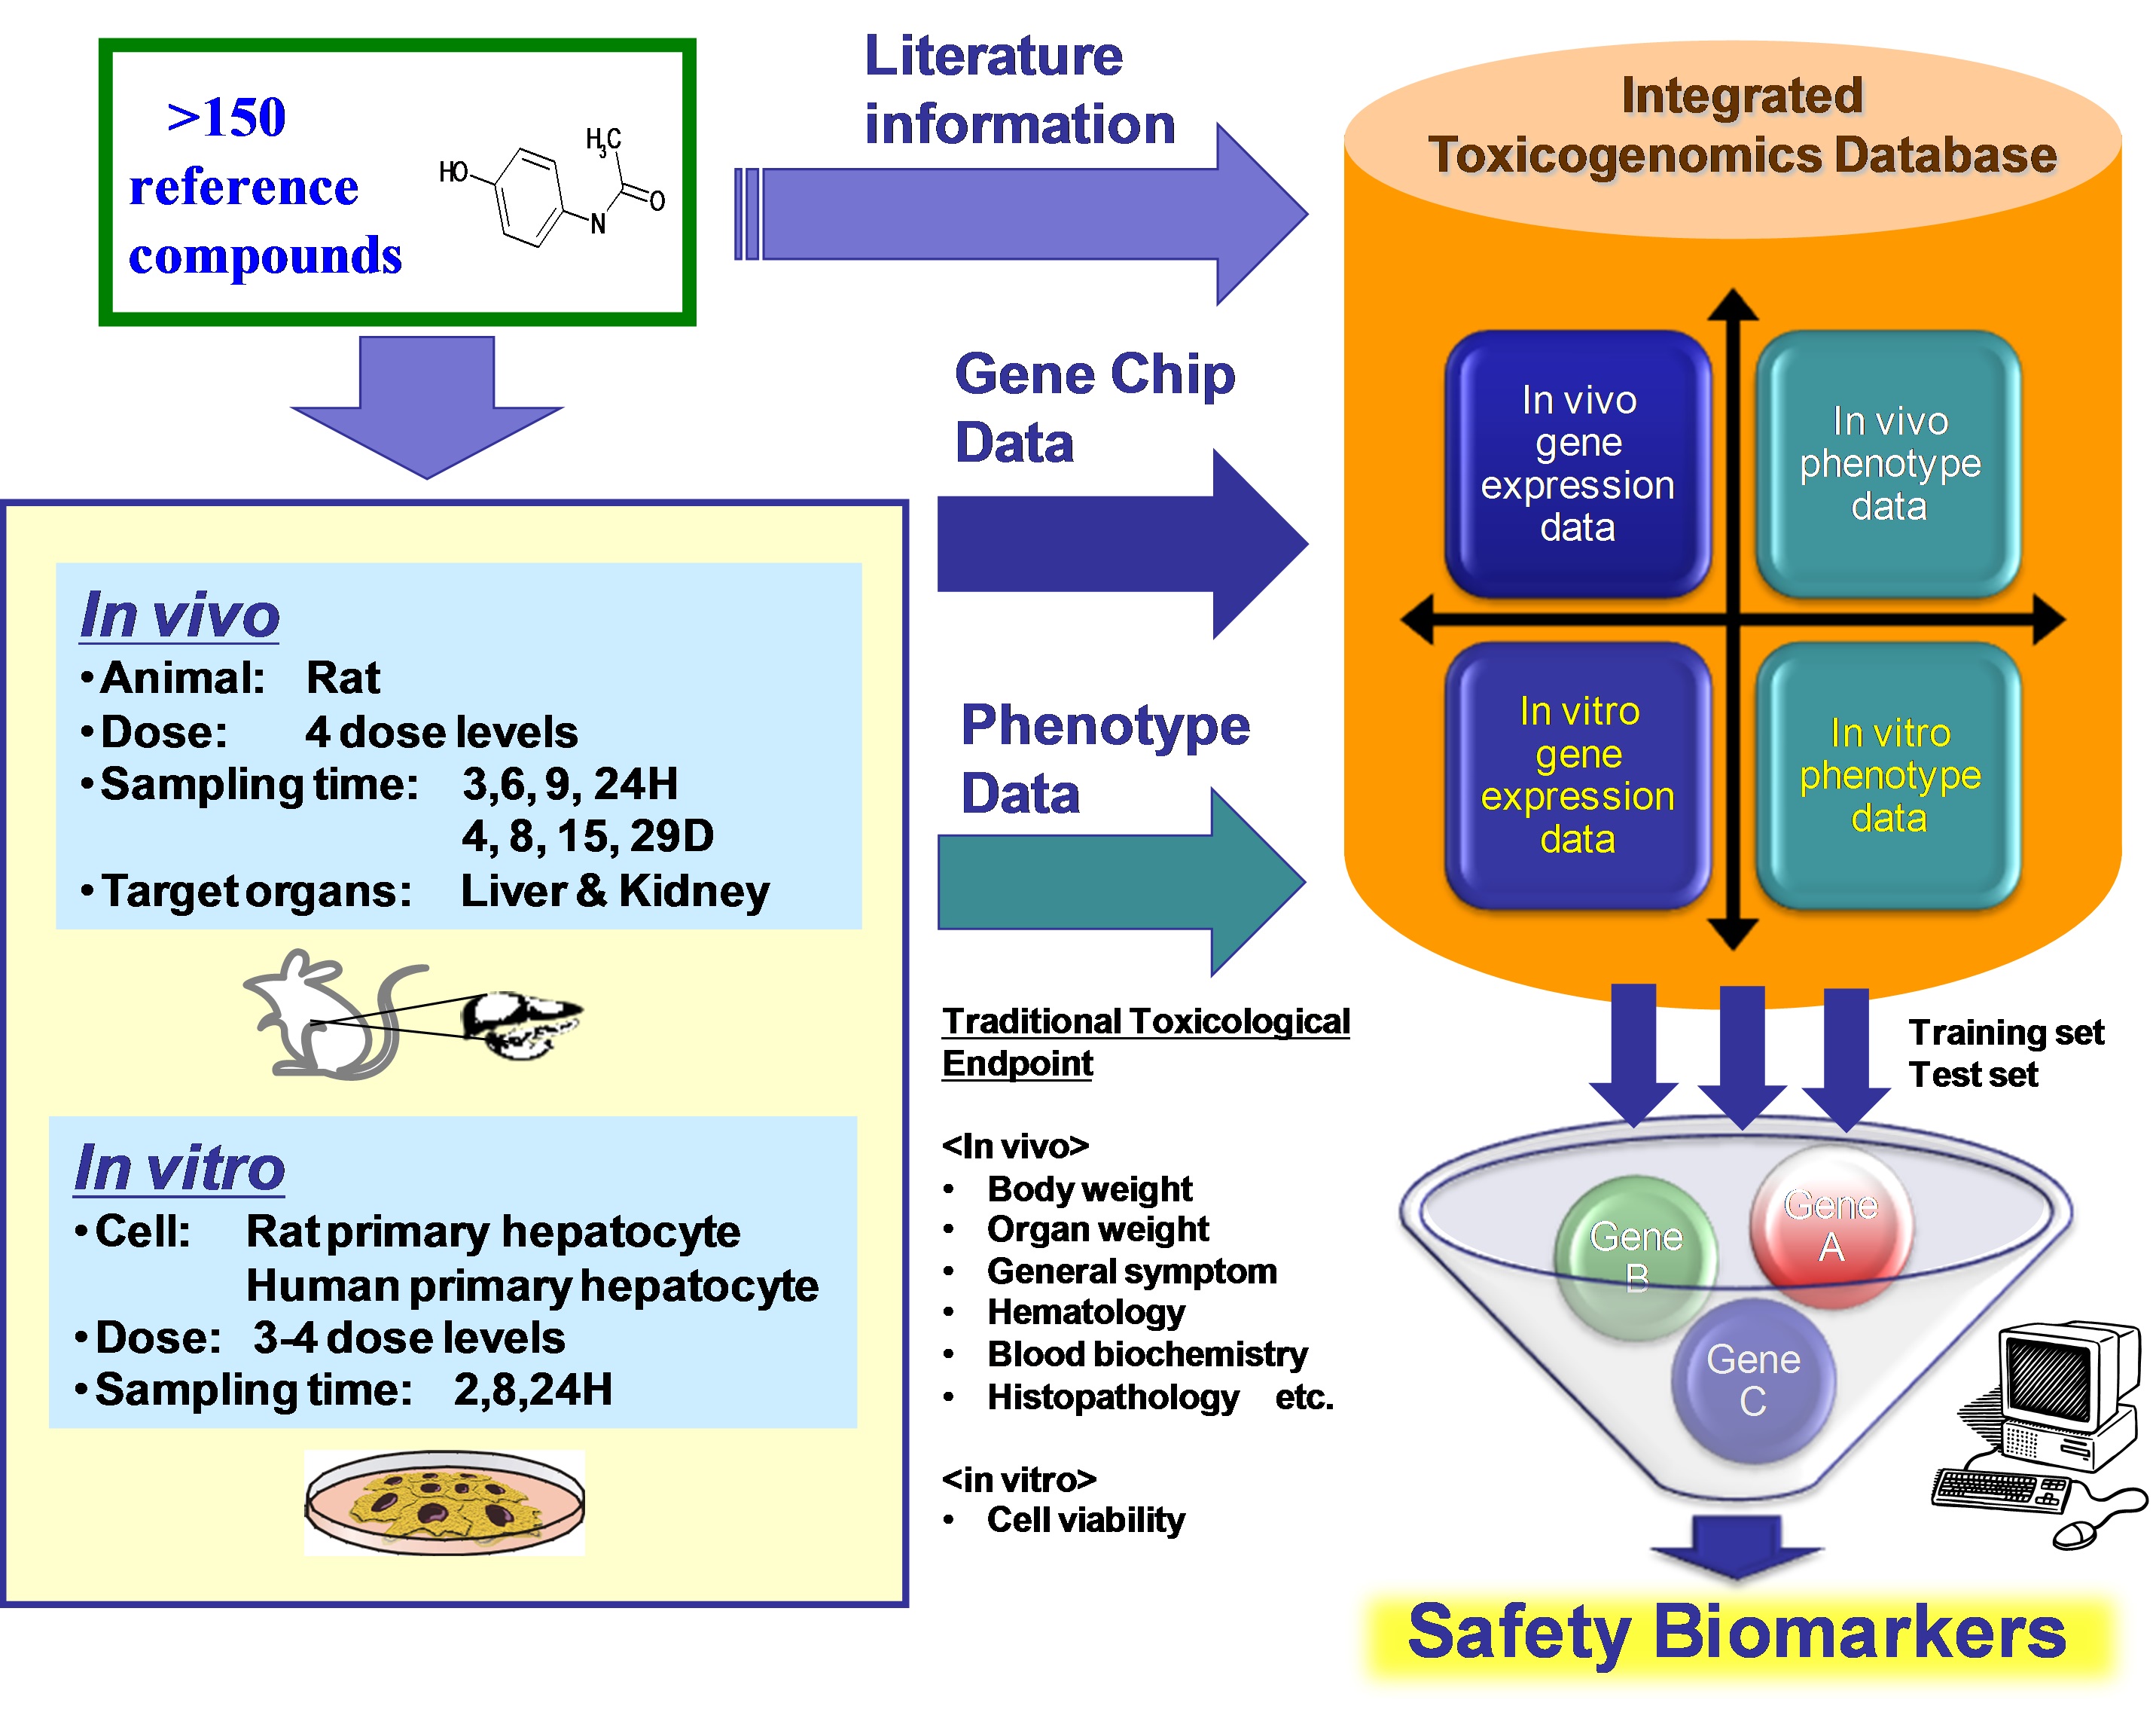 Outline of safety biomarker development